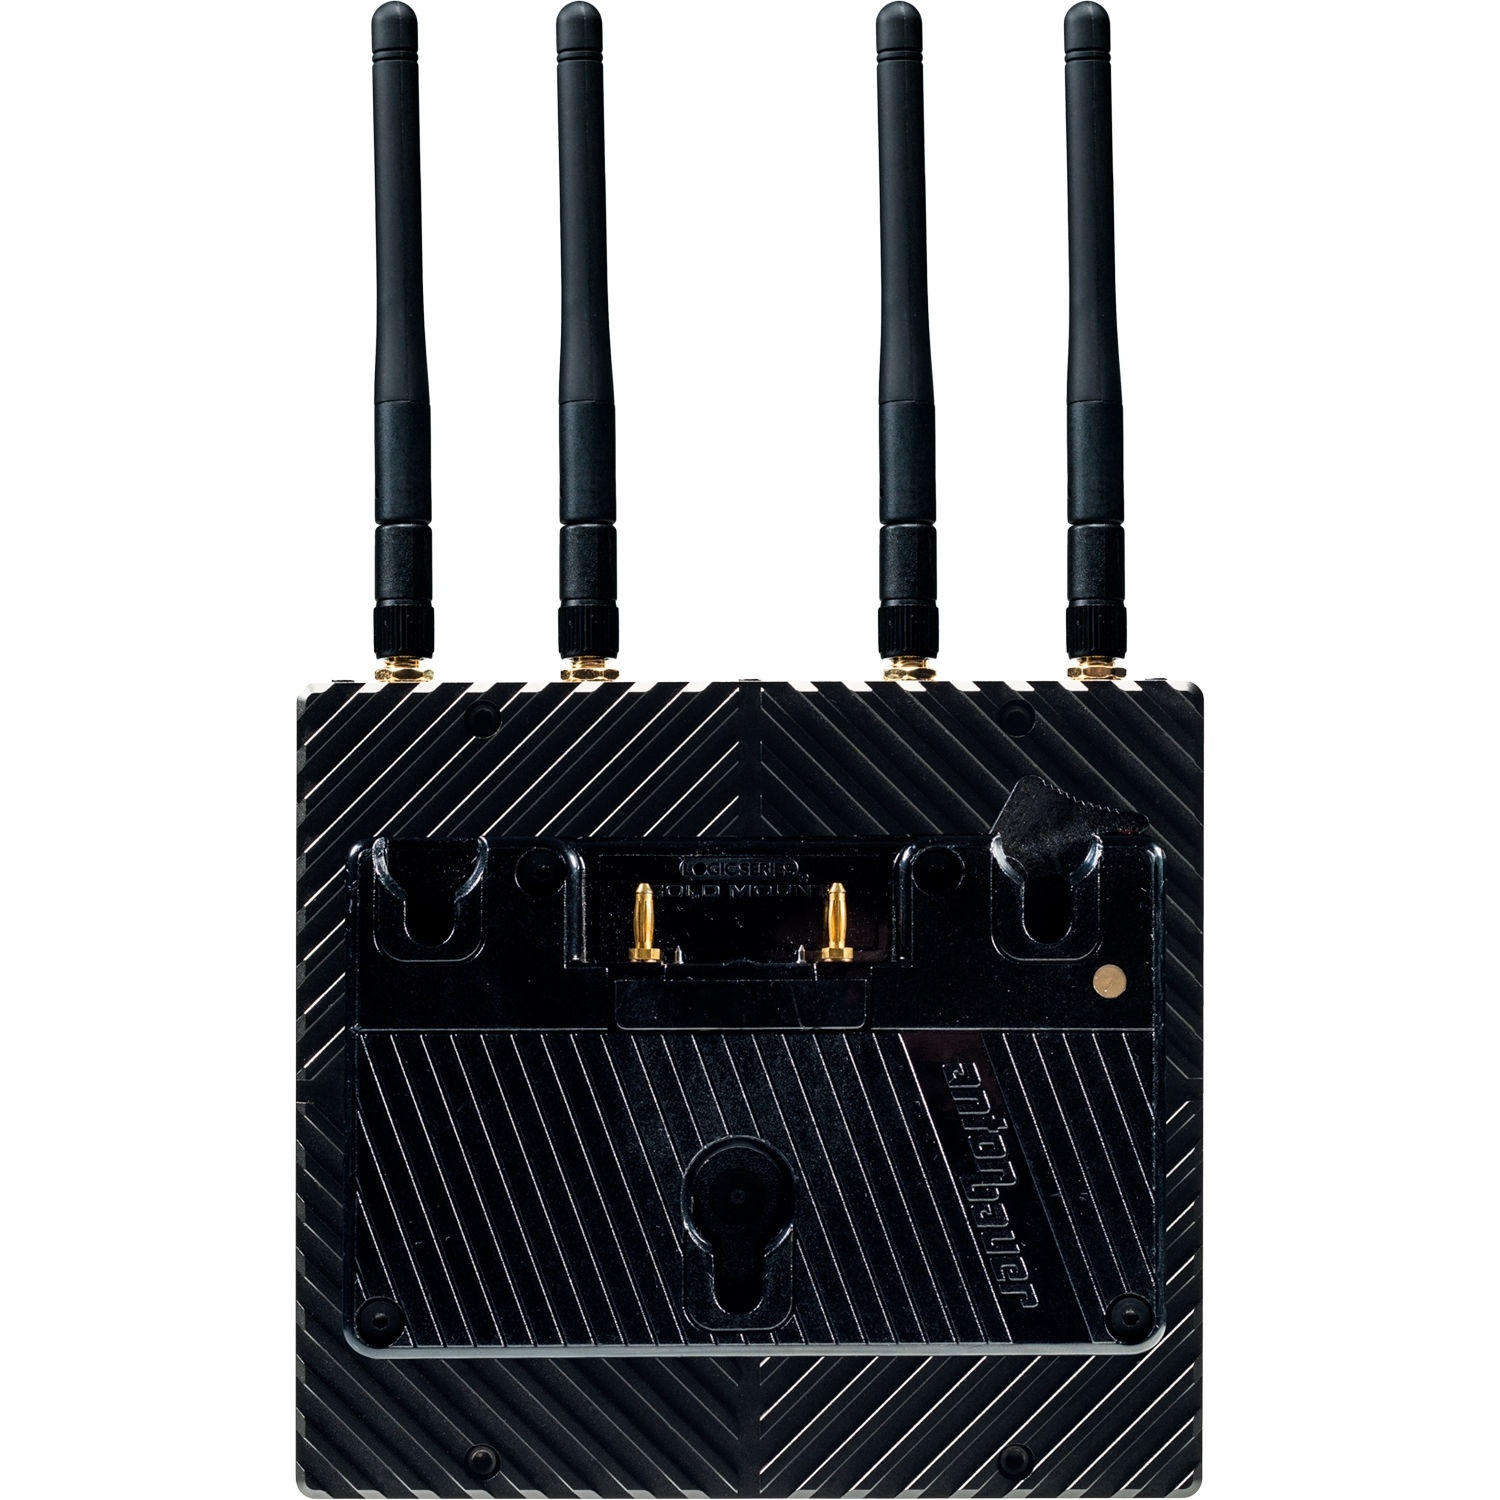 Teradek Link Pro Dual Band Wi-Fi Router (Gold Mount)